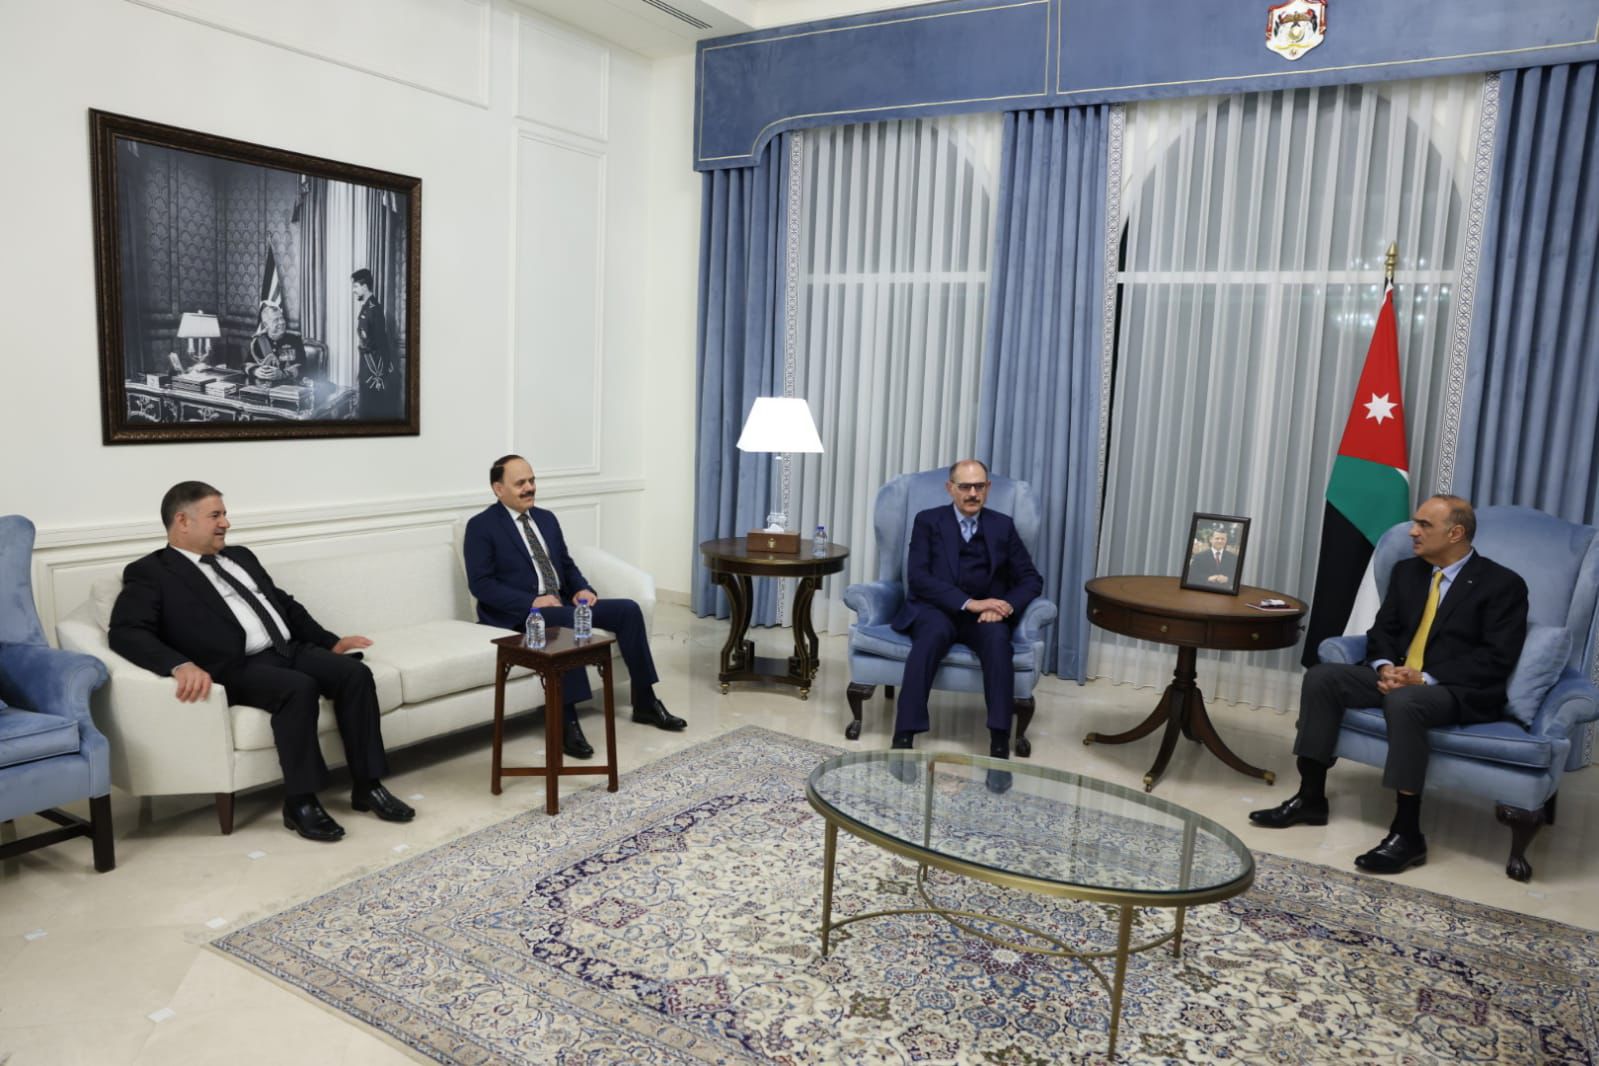 President of the Federal Supreme Court Judge Jassim Al-Amiri meets the Prime Minister of Jordan